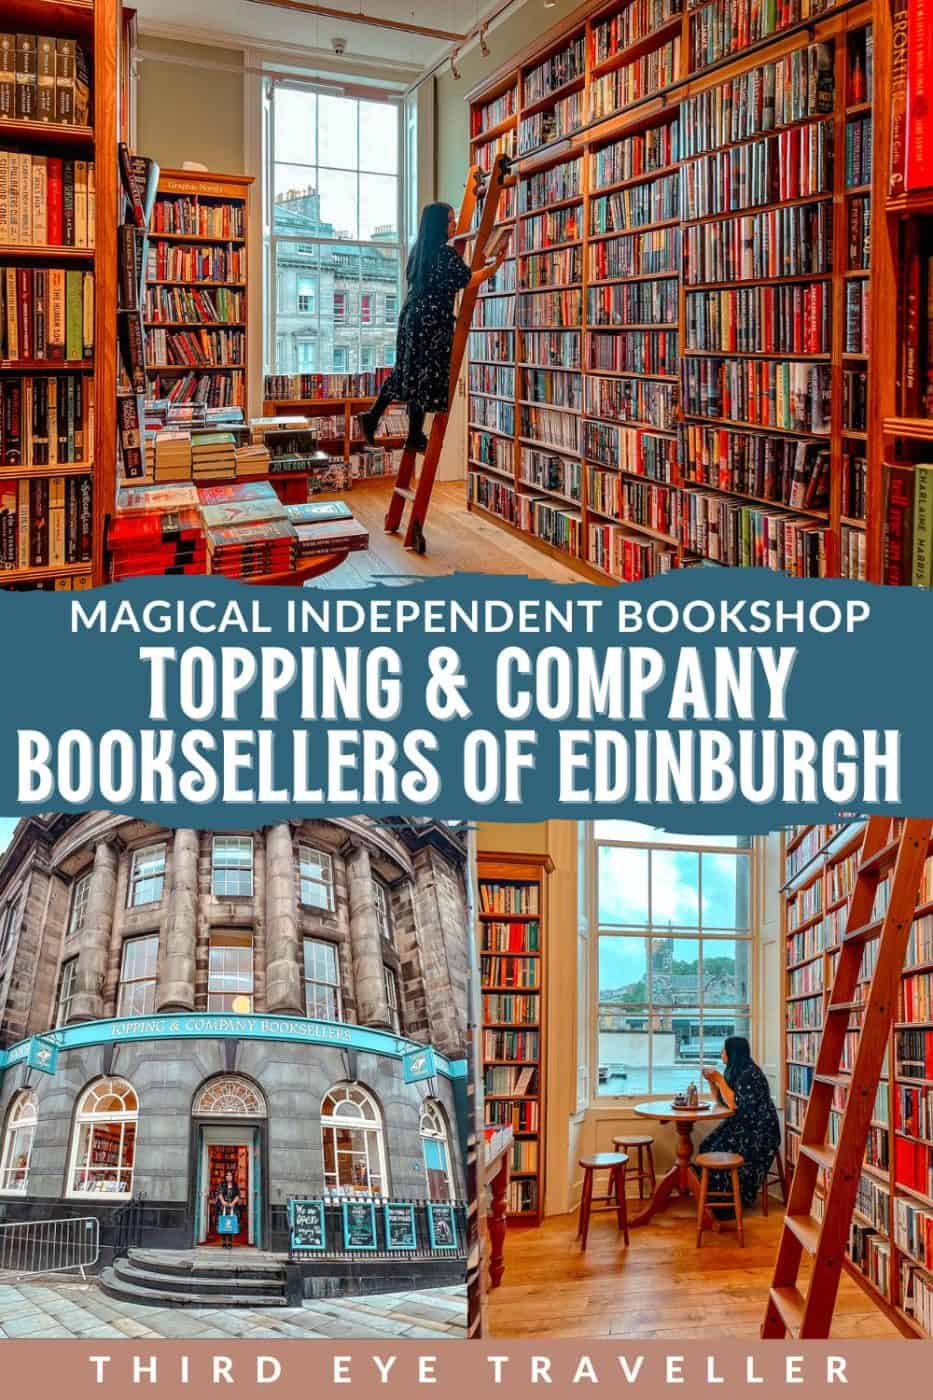 Toppings Edinburgh bookshop 